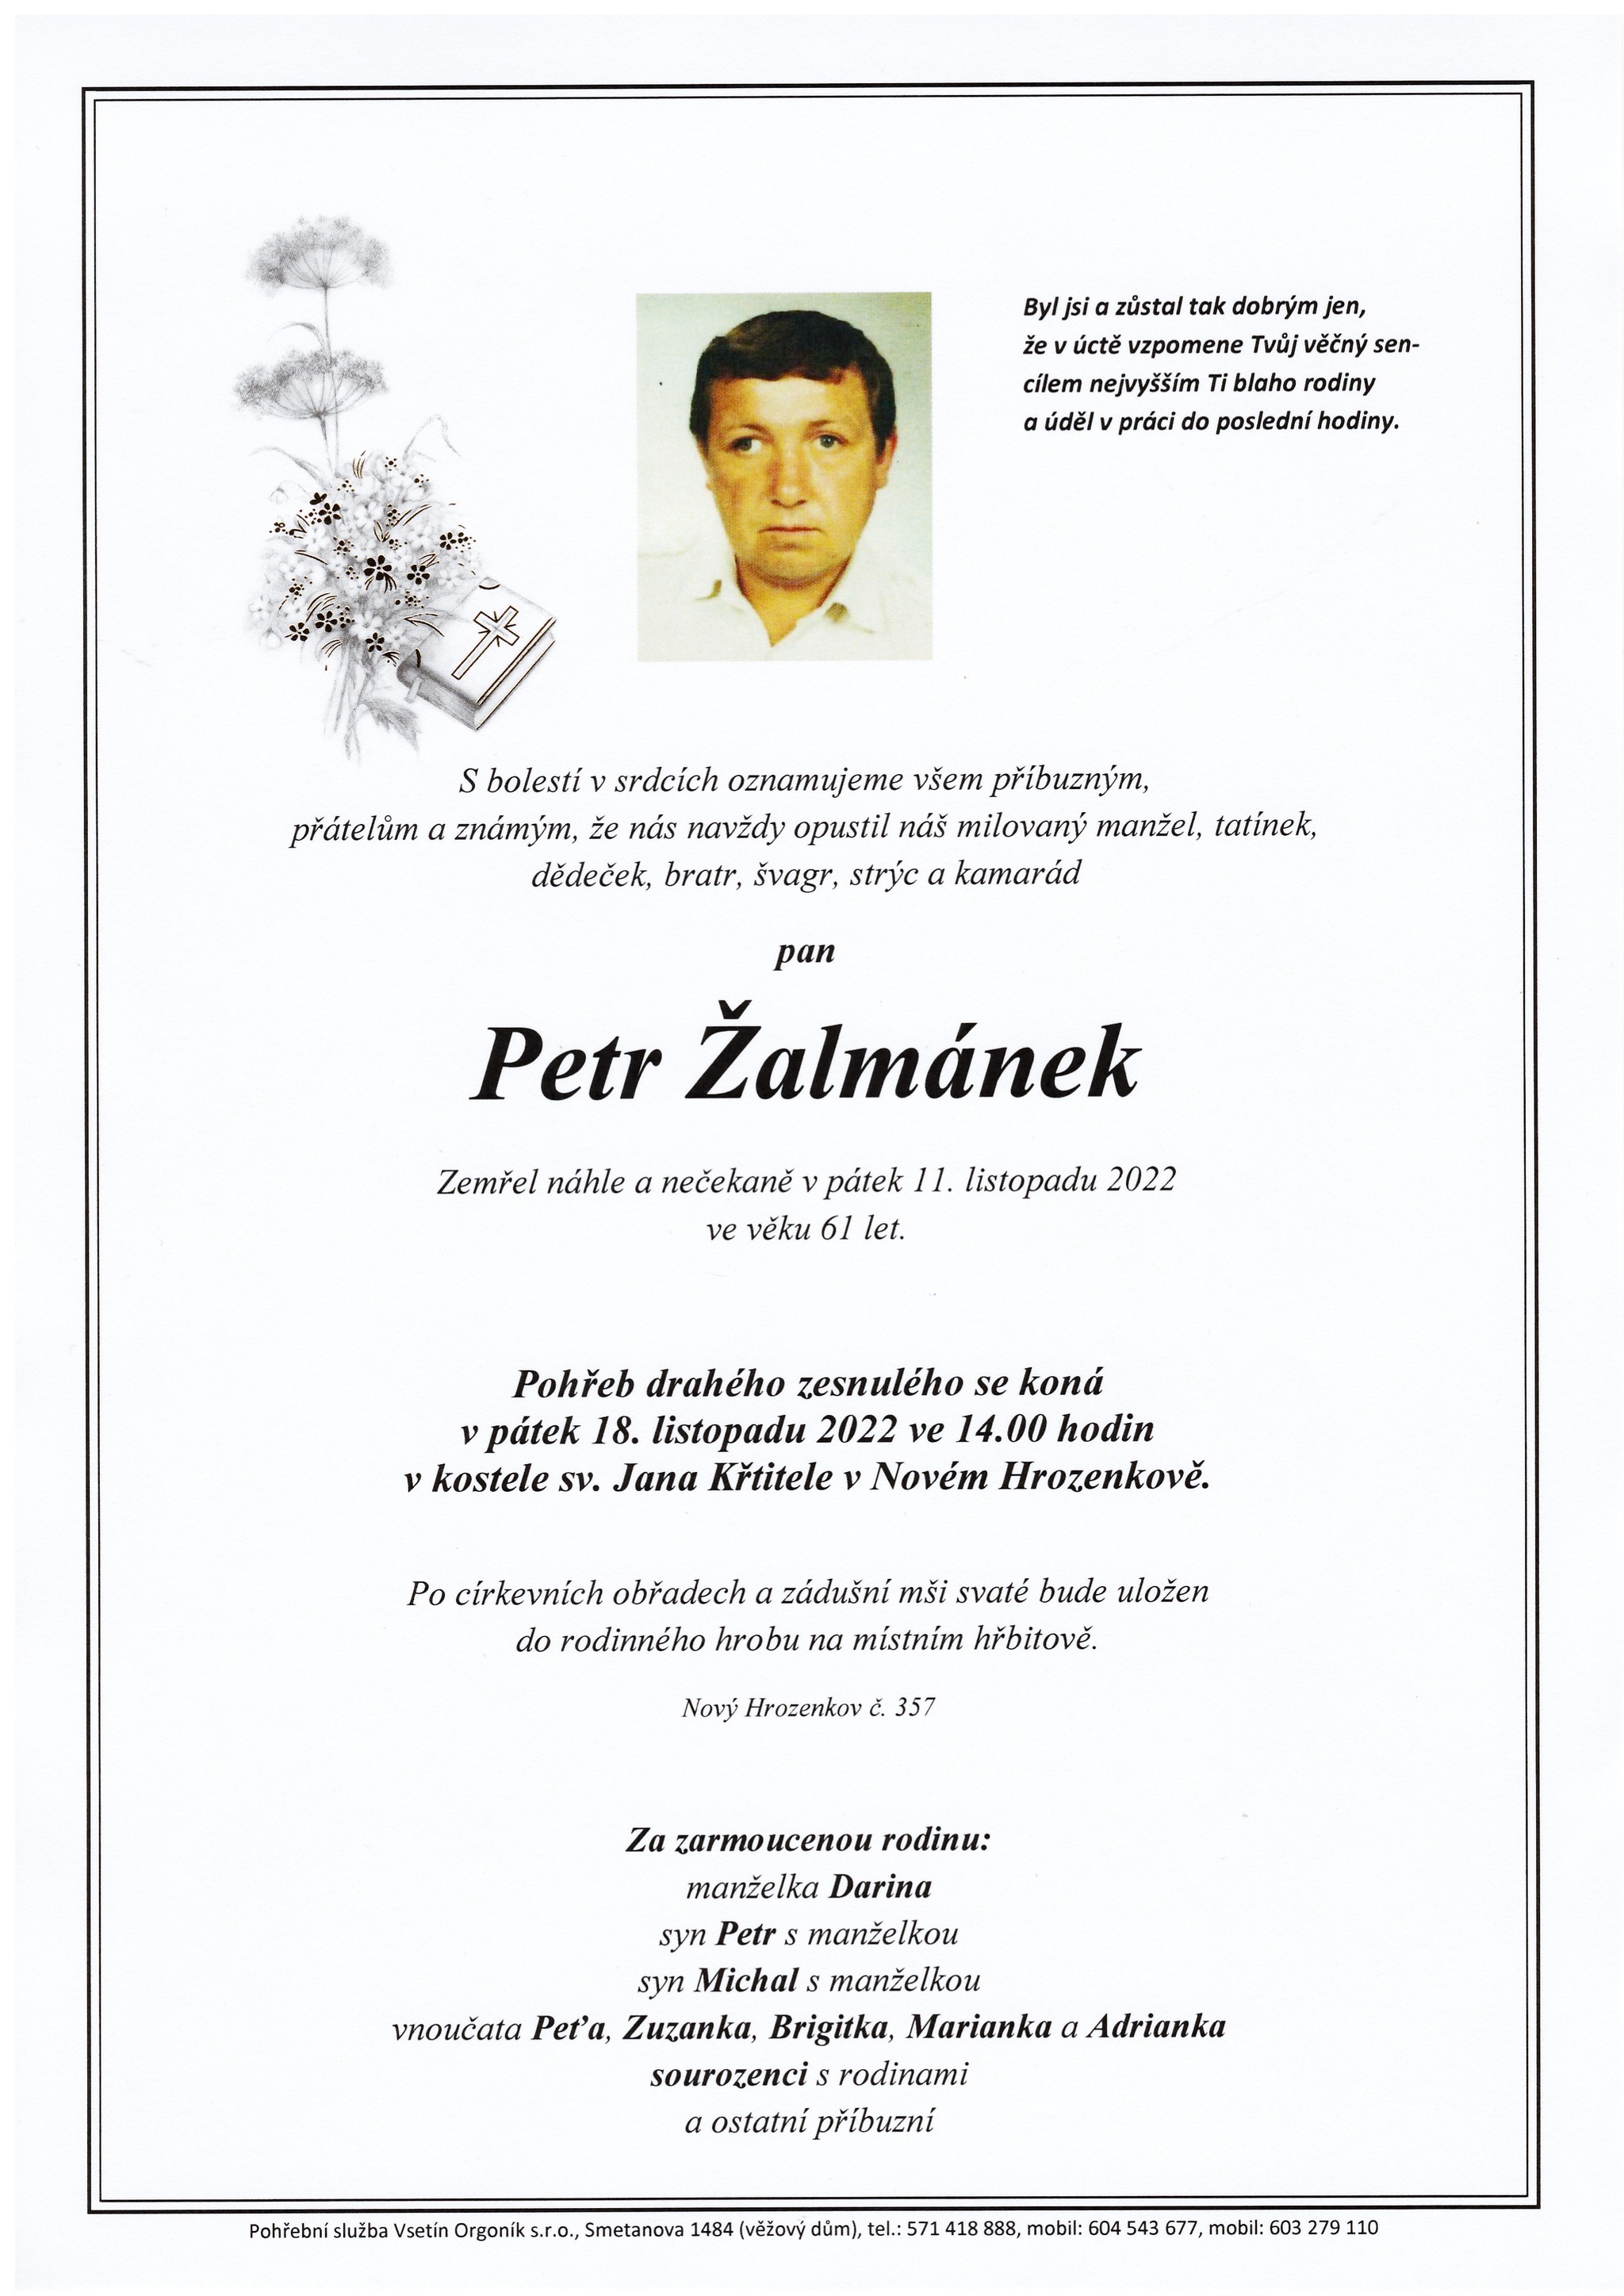 Petr Žalmánek